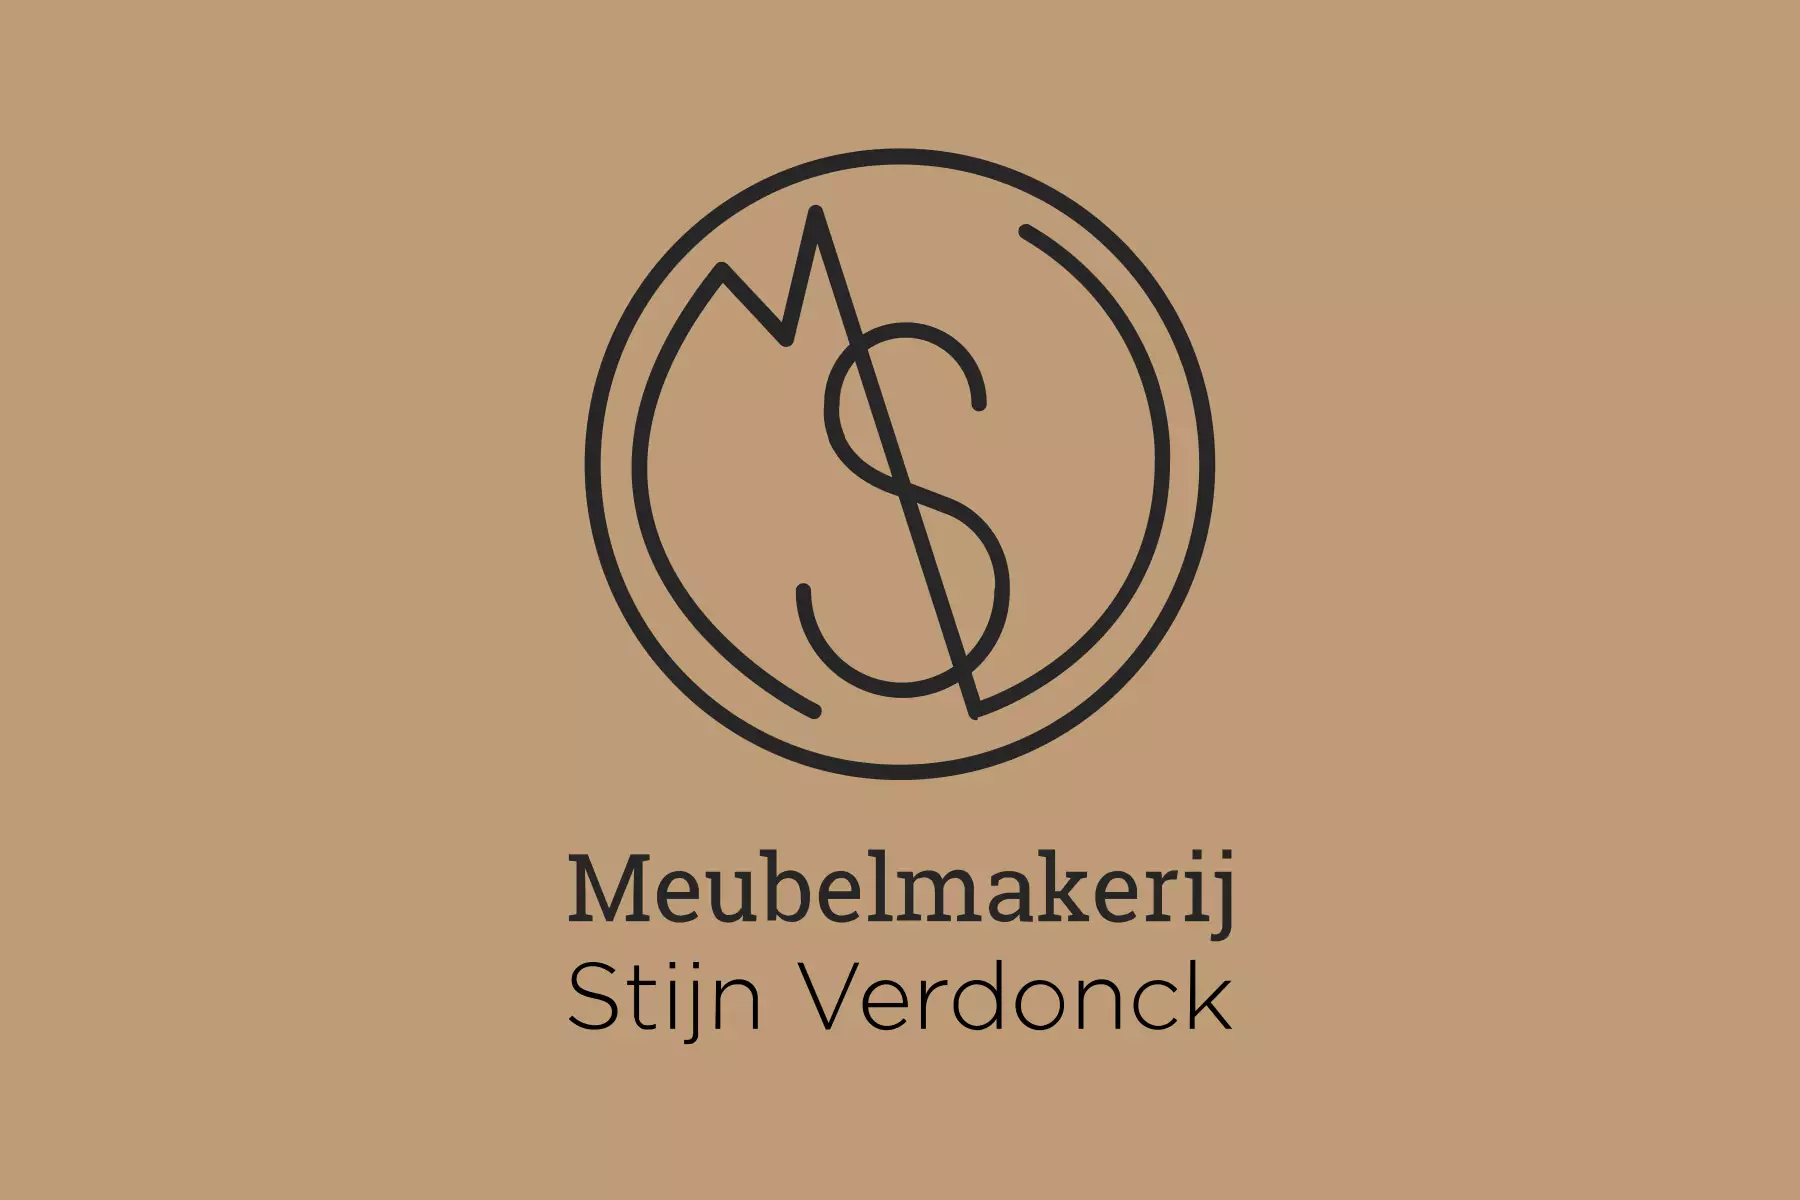 Meubelmakerij, logo